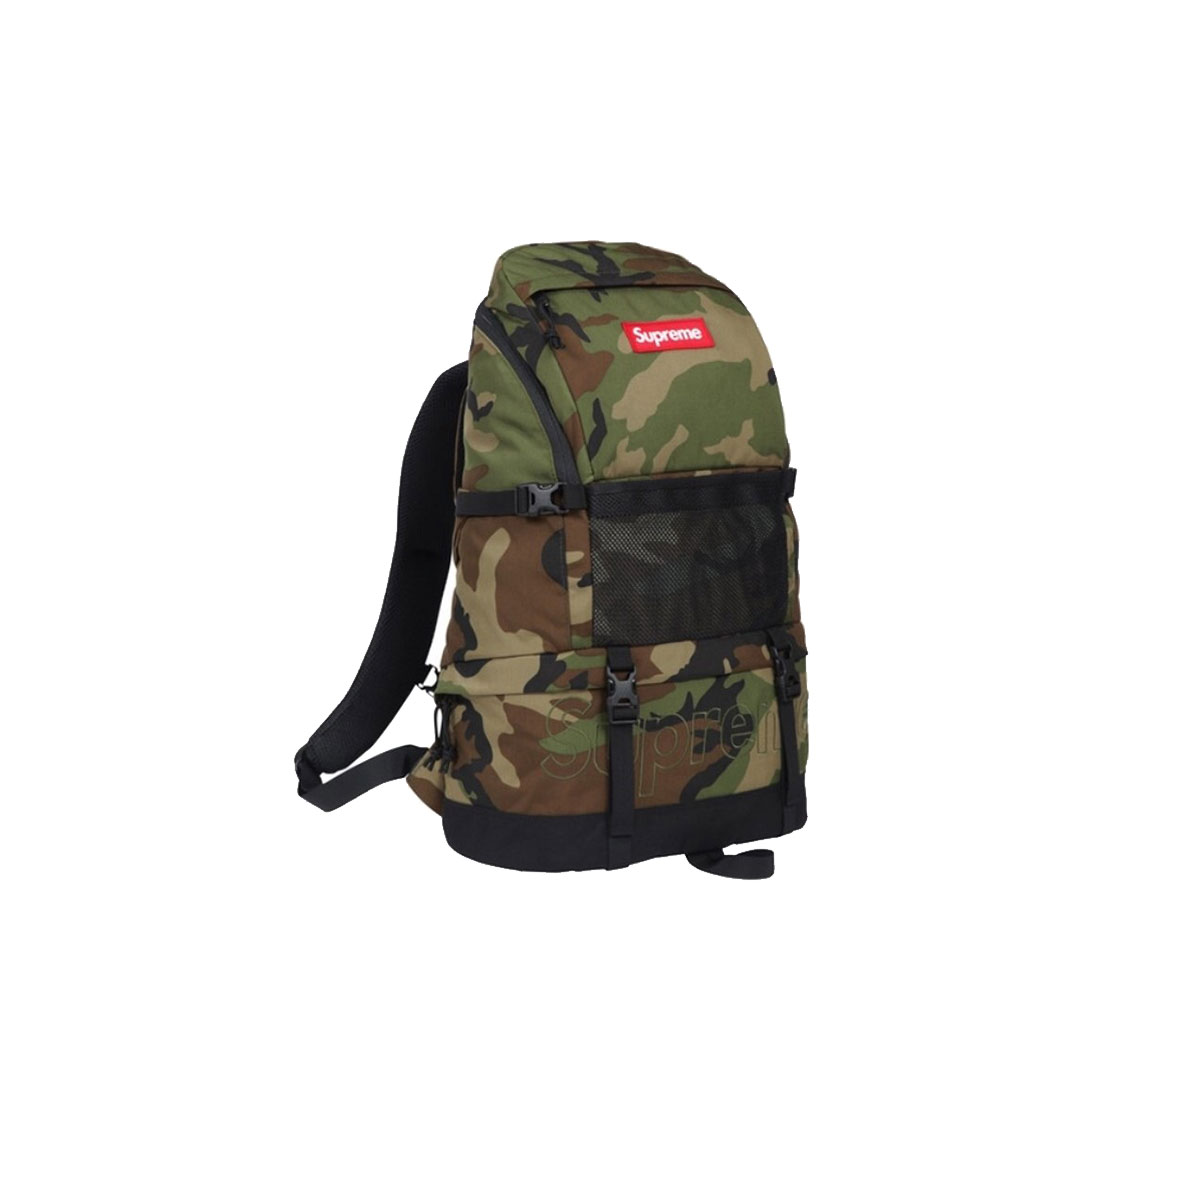 Supreme Camo Woodland Contour Backpack 2015 AW Camouflage Good